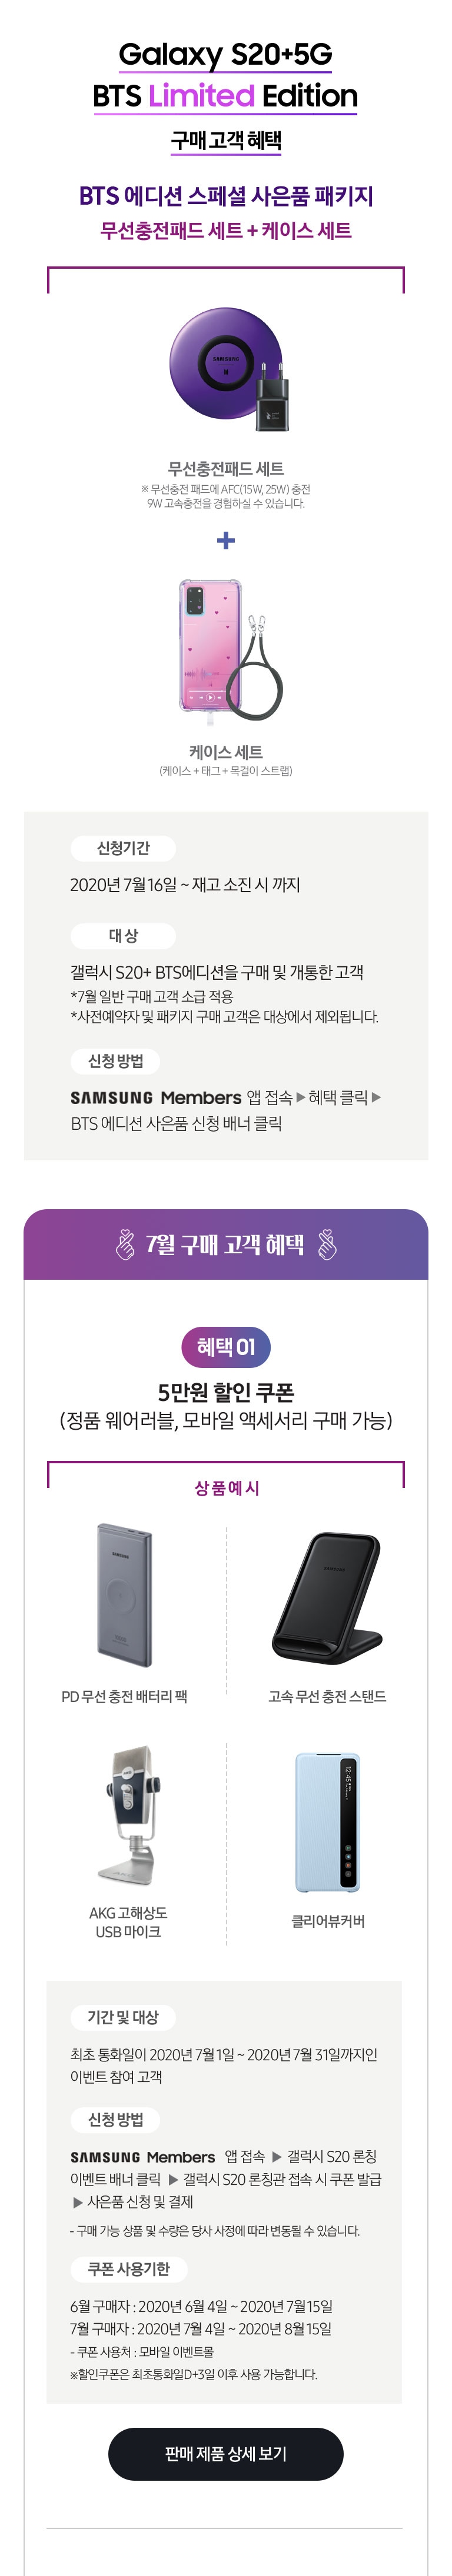 Galaxy S20 구매혜택 | 삼성닷컴